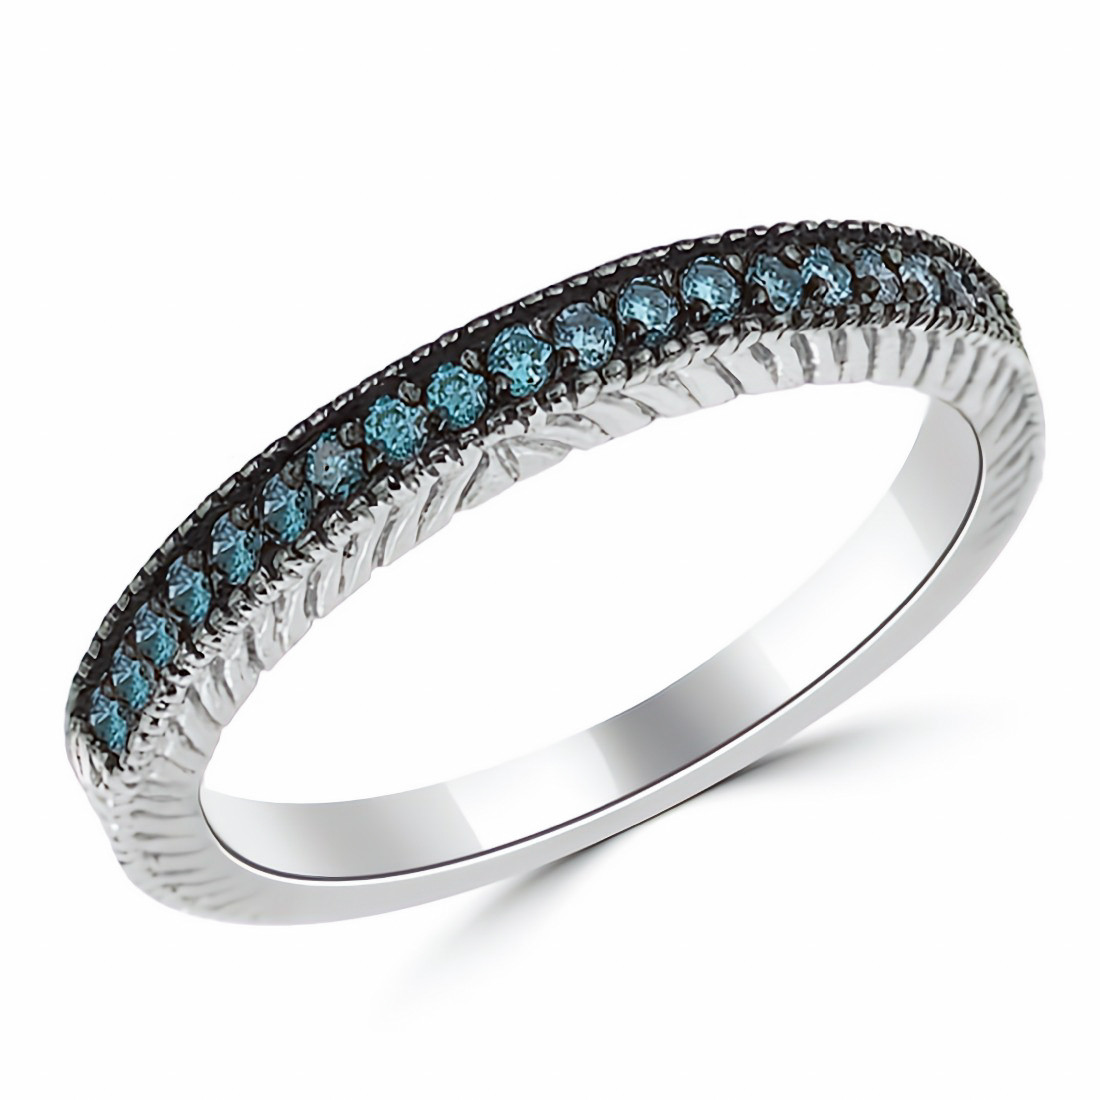 Fancy Blue Diamond Wedding Ring Antique Style Band